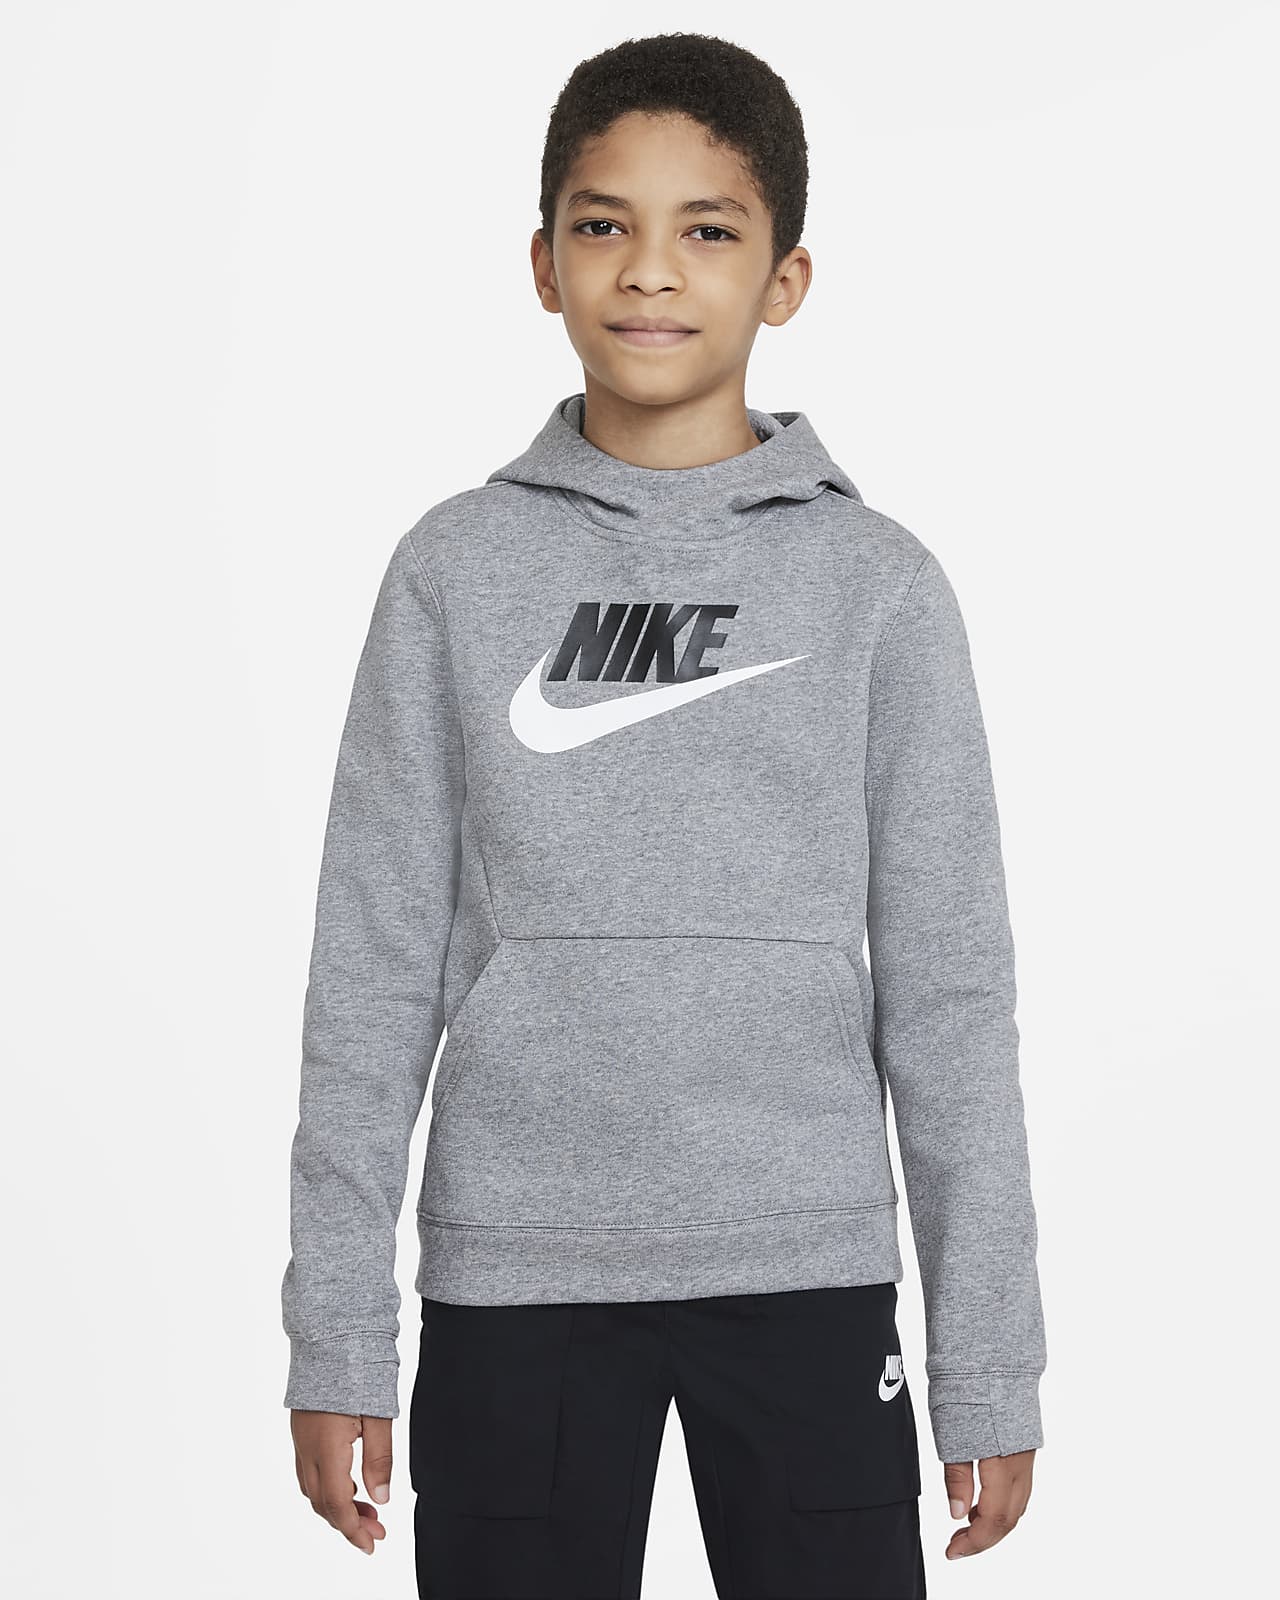 Club Big Pullover Fleece Hoodie. Nike Sportswear (Boys\') Kids\'